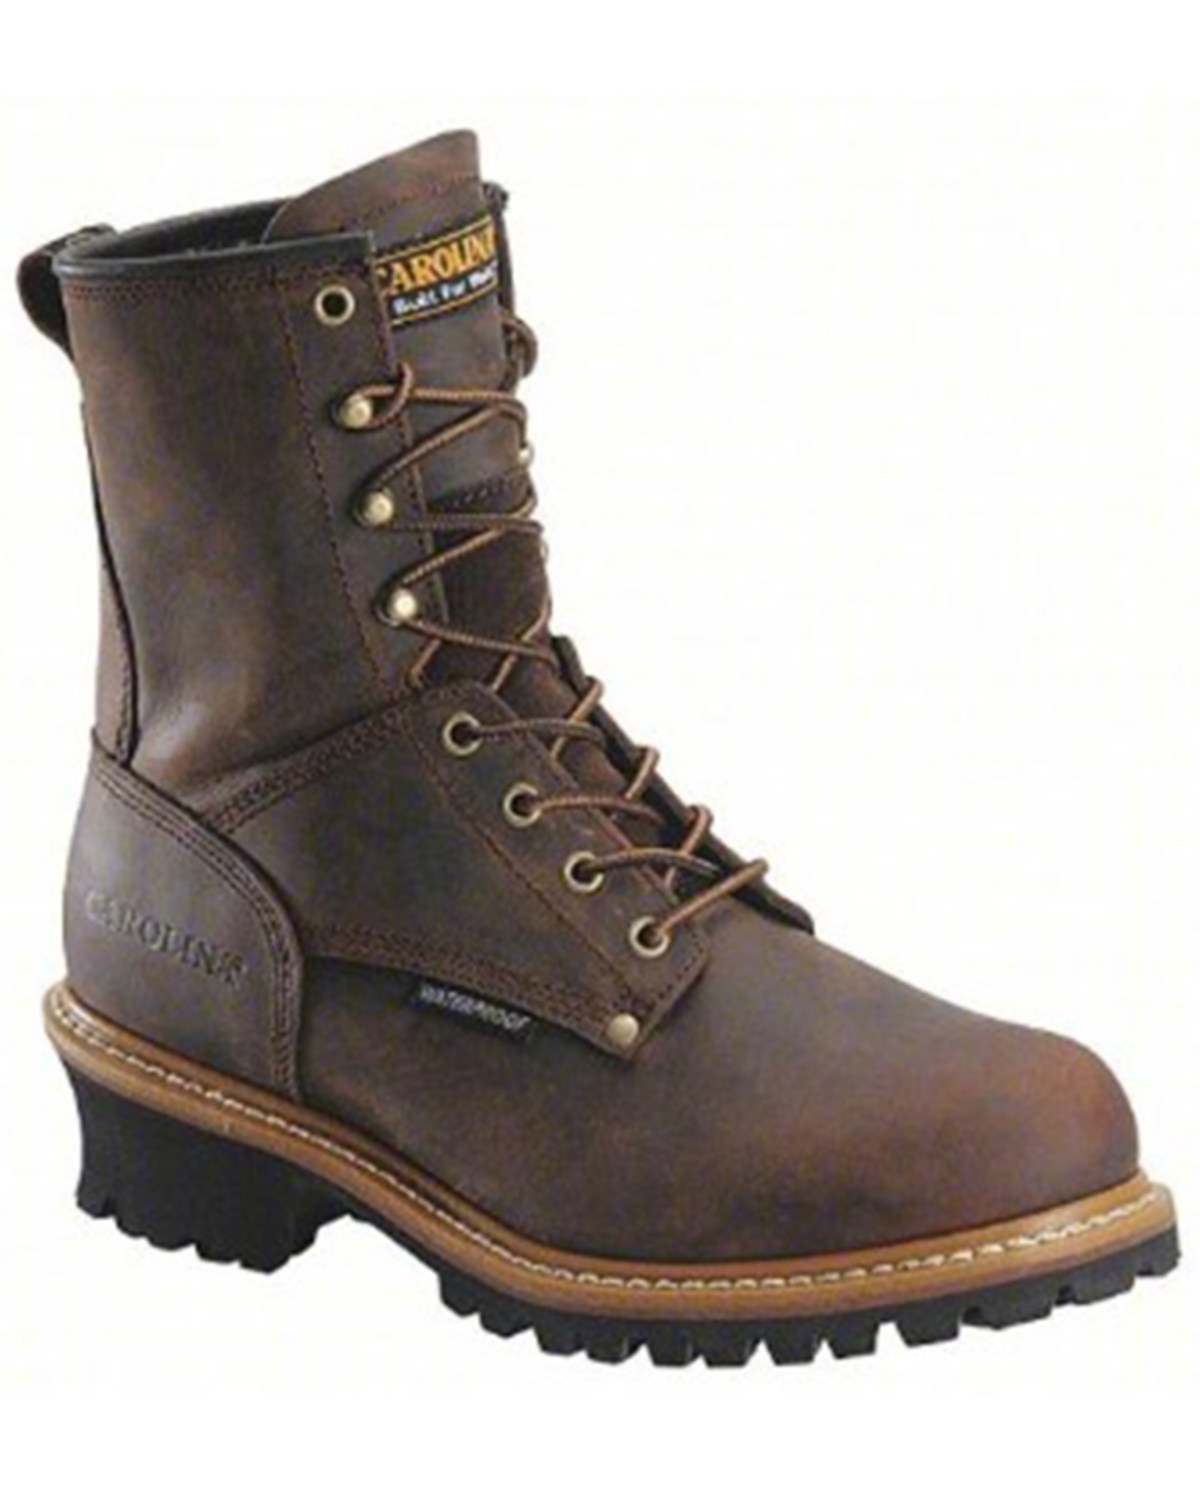 Carolina Men's Logger 8" Steel Toe Work Boots